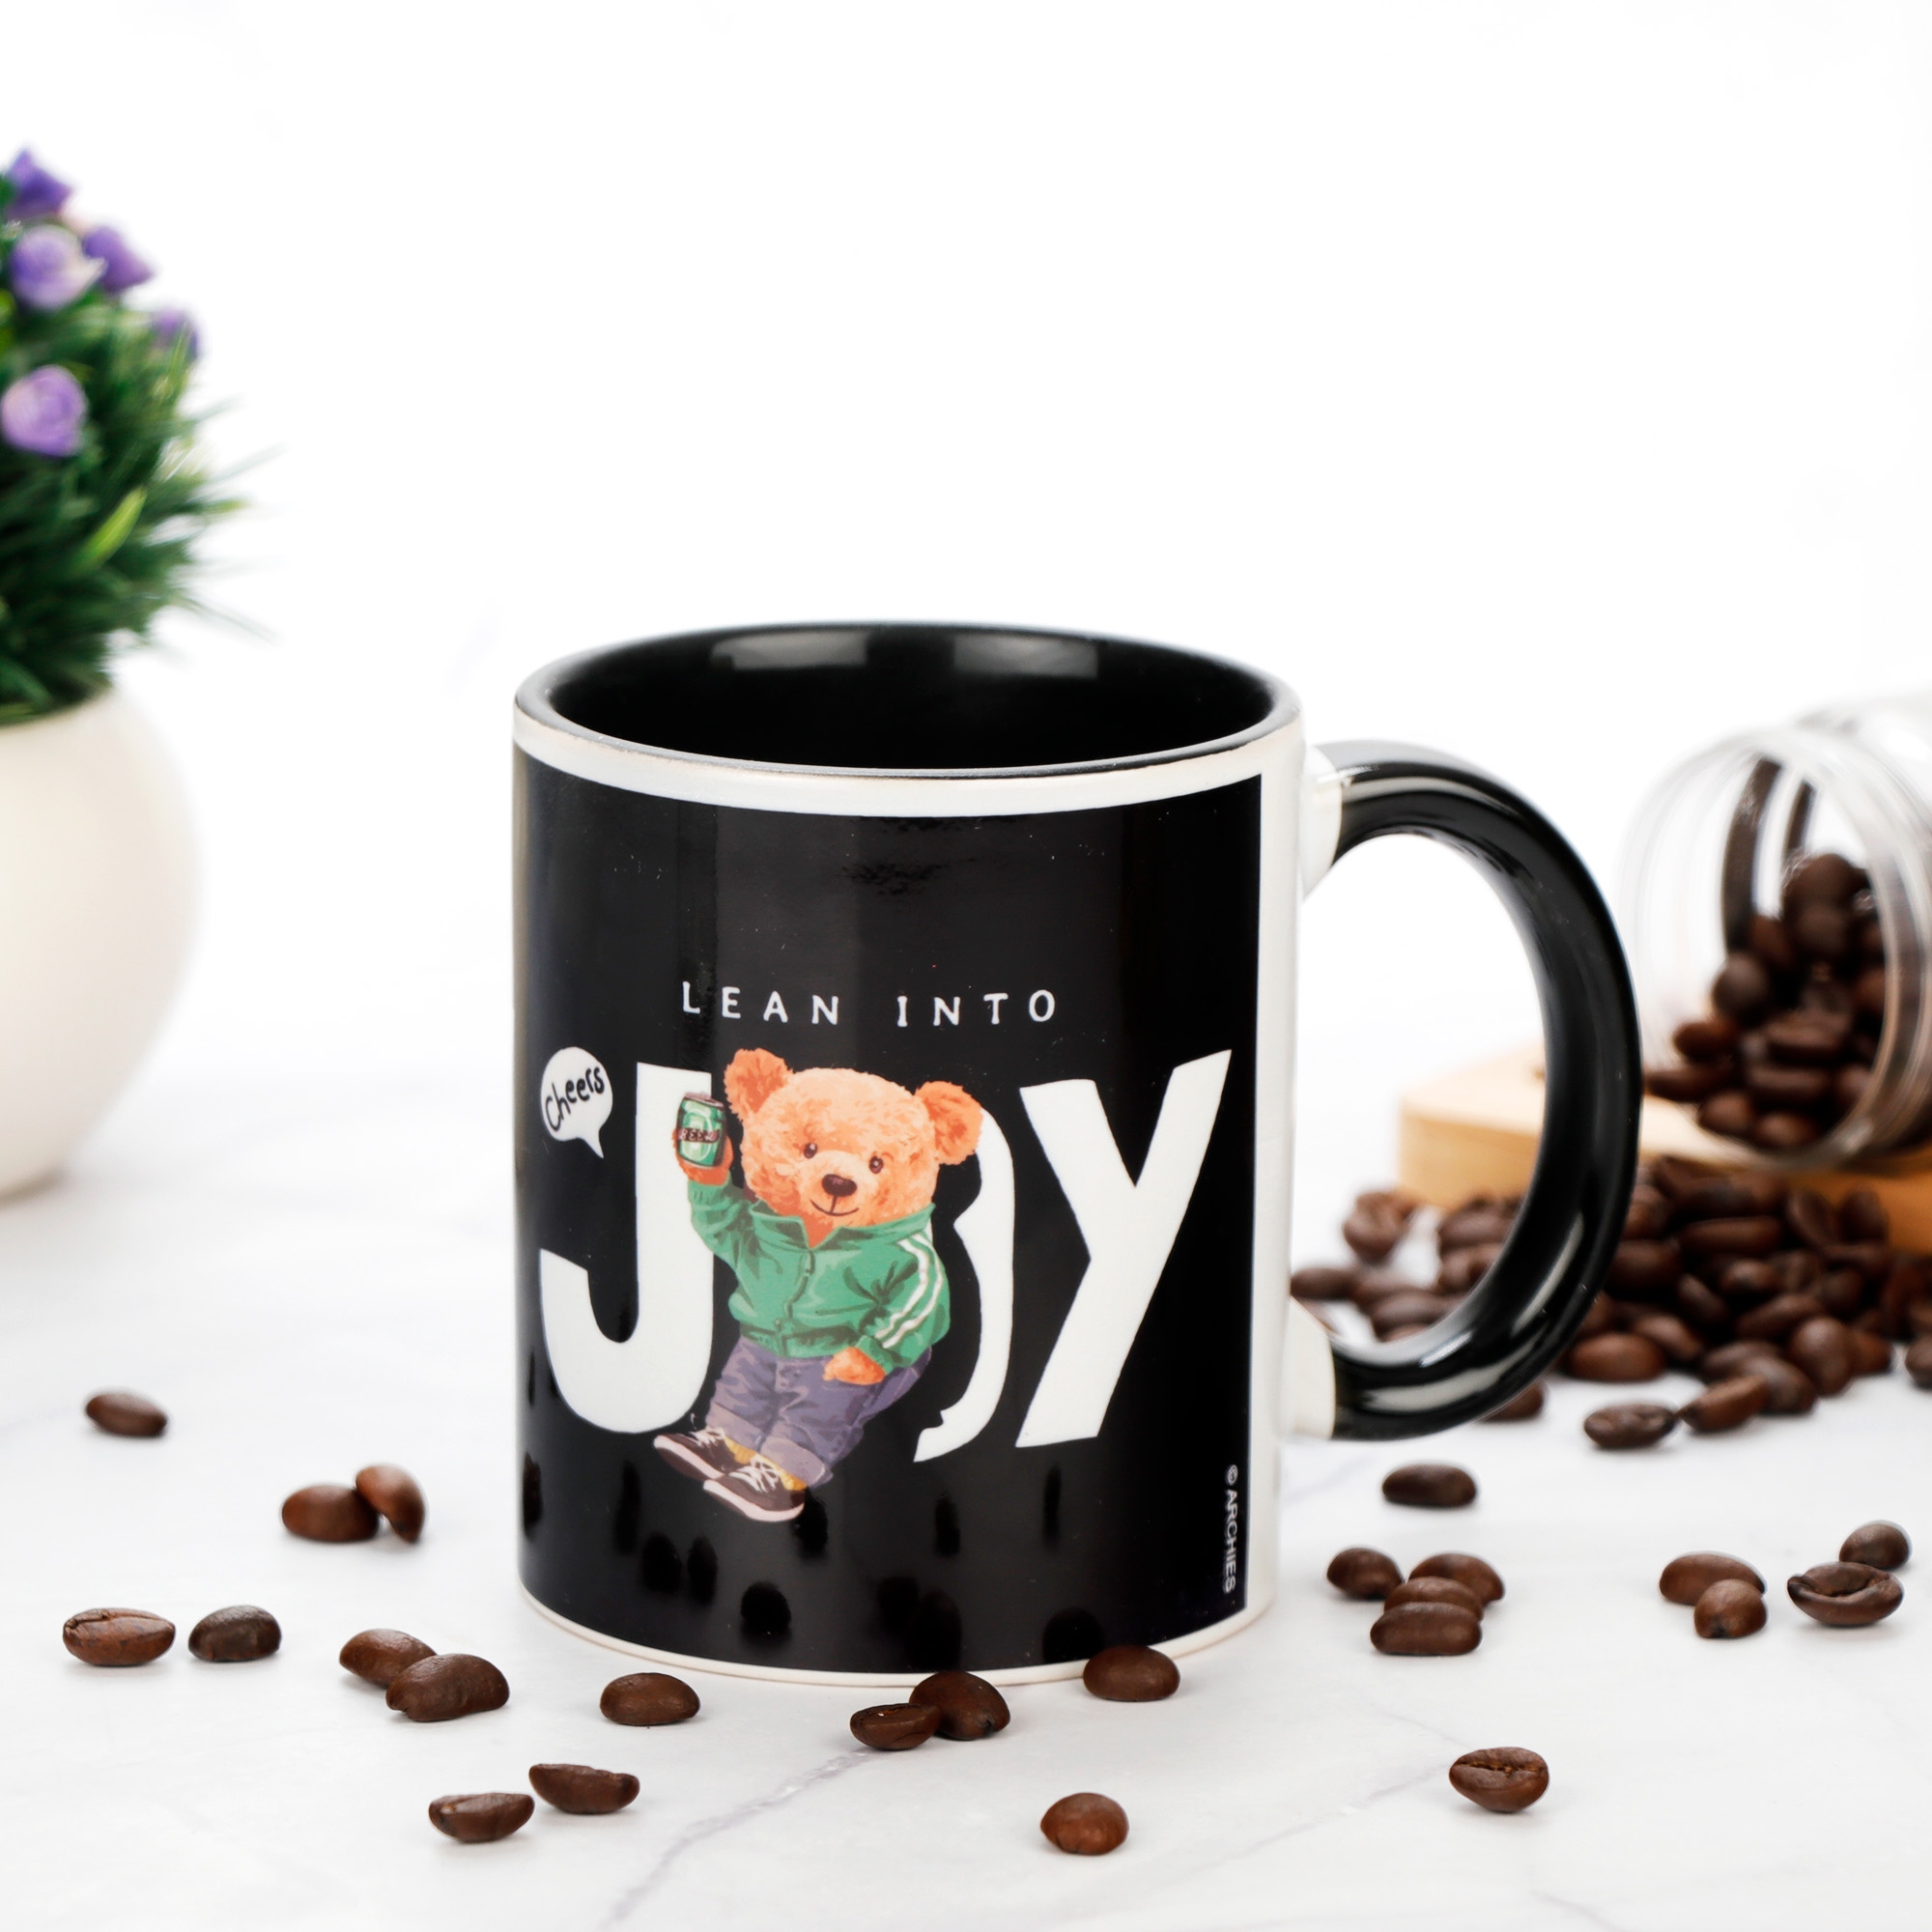 Archies | Archies KEEPSAKE MUG - LEARN INTO  CHEERS  JOY Mug Coffee Cup White Printed Ceramic Gift  (12 x 11 x 9) (350 ml)